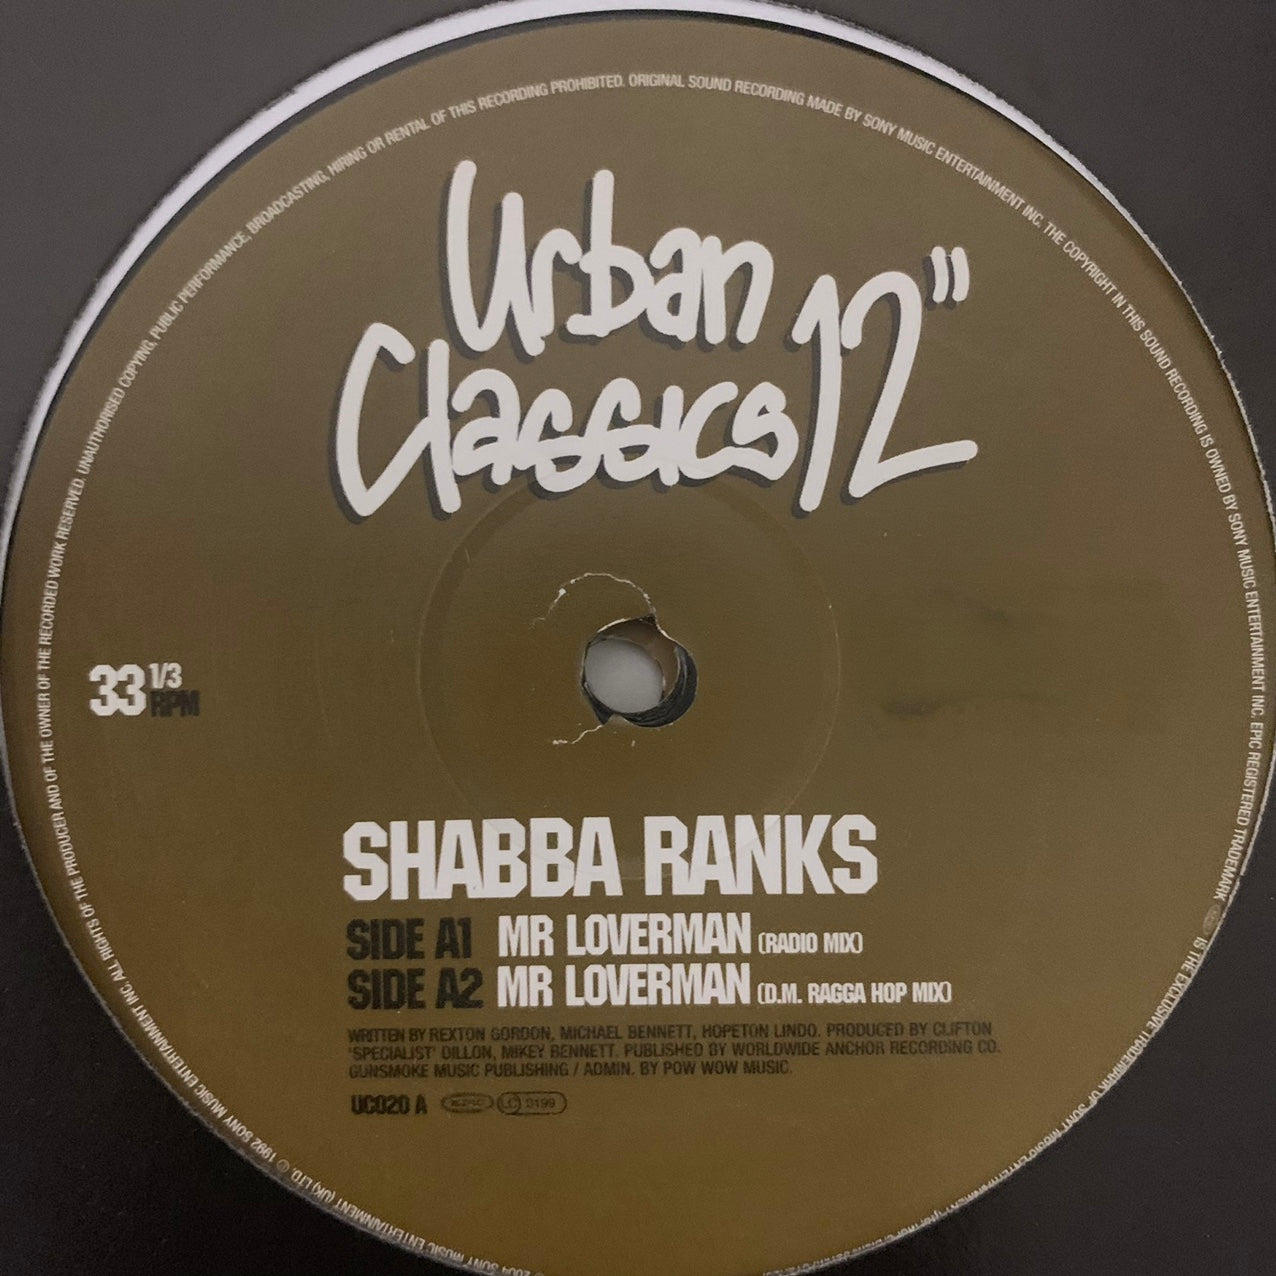 Shabba Ranks “Mr Loverman” / “Trailer Load Of Girls” / “Wicked In Bed” 3 Track 12inch Vinyl